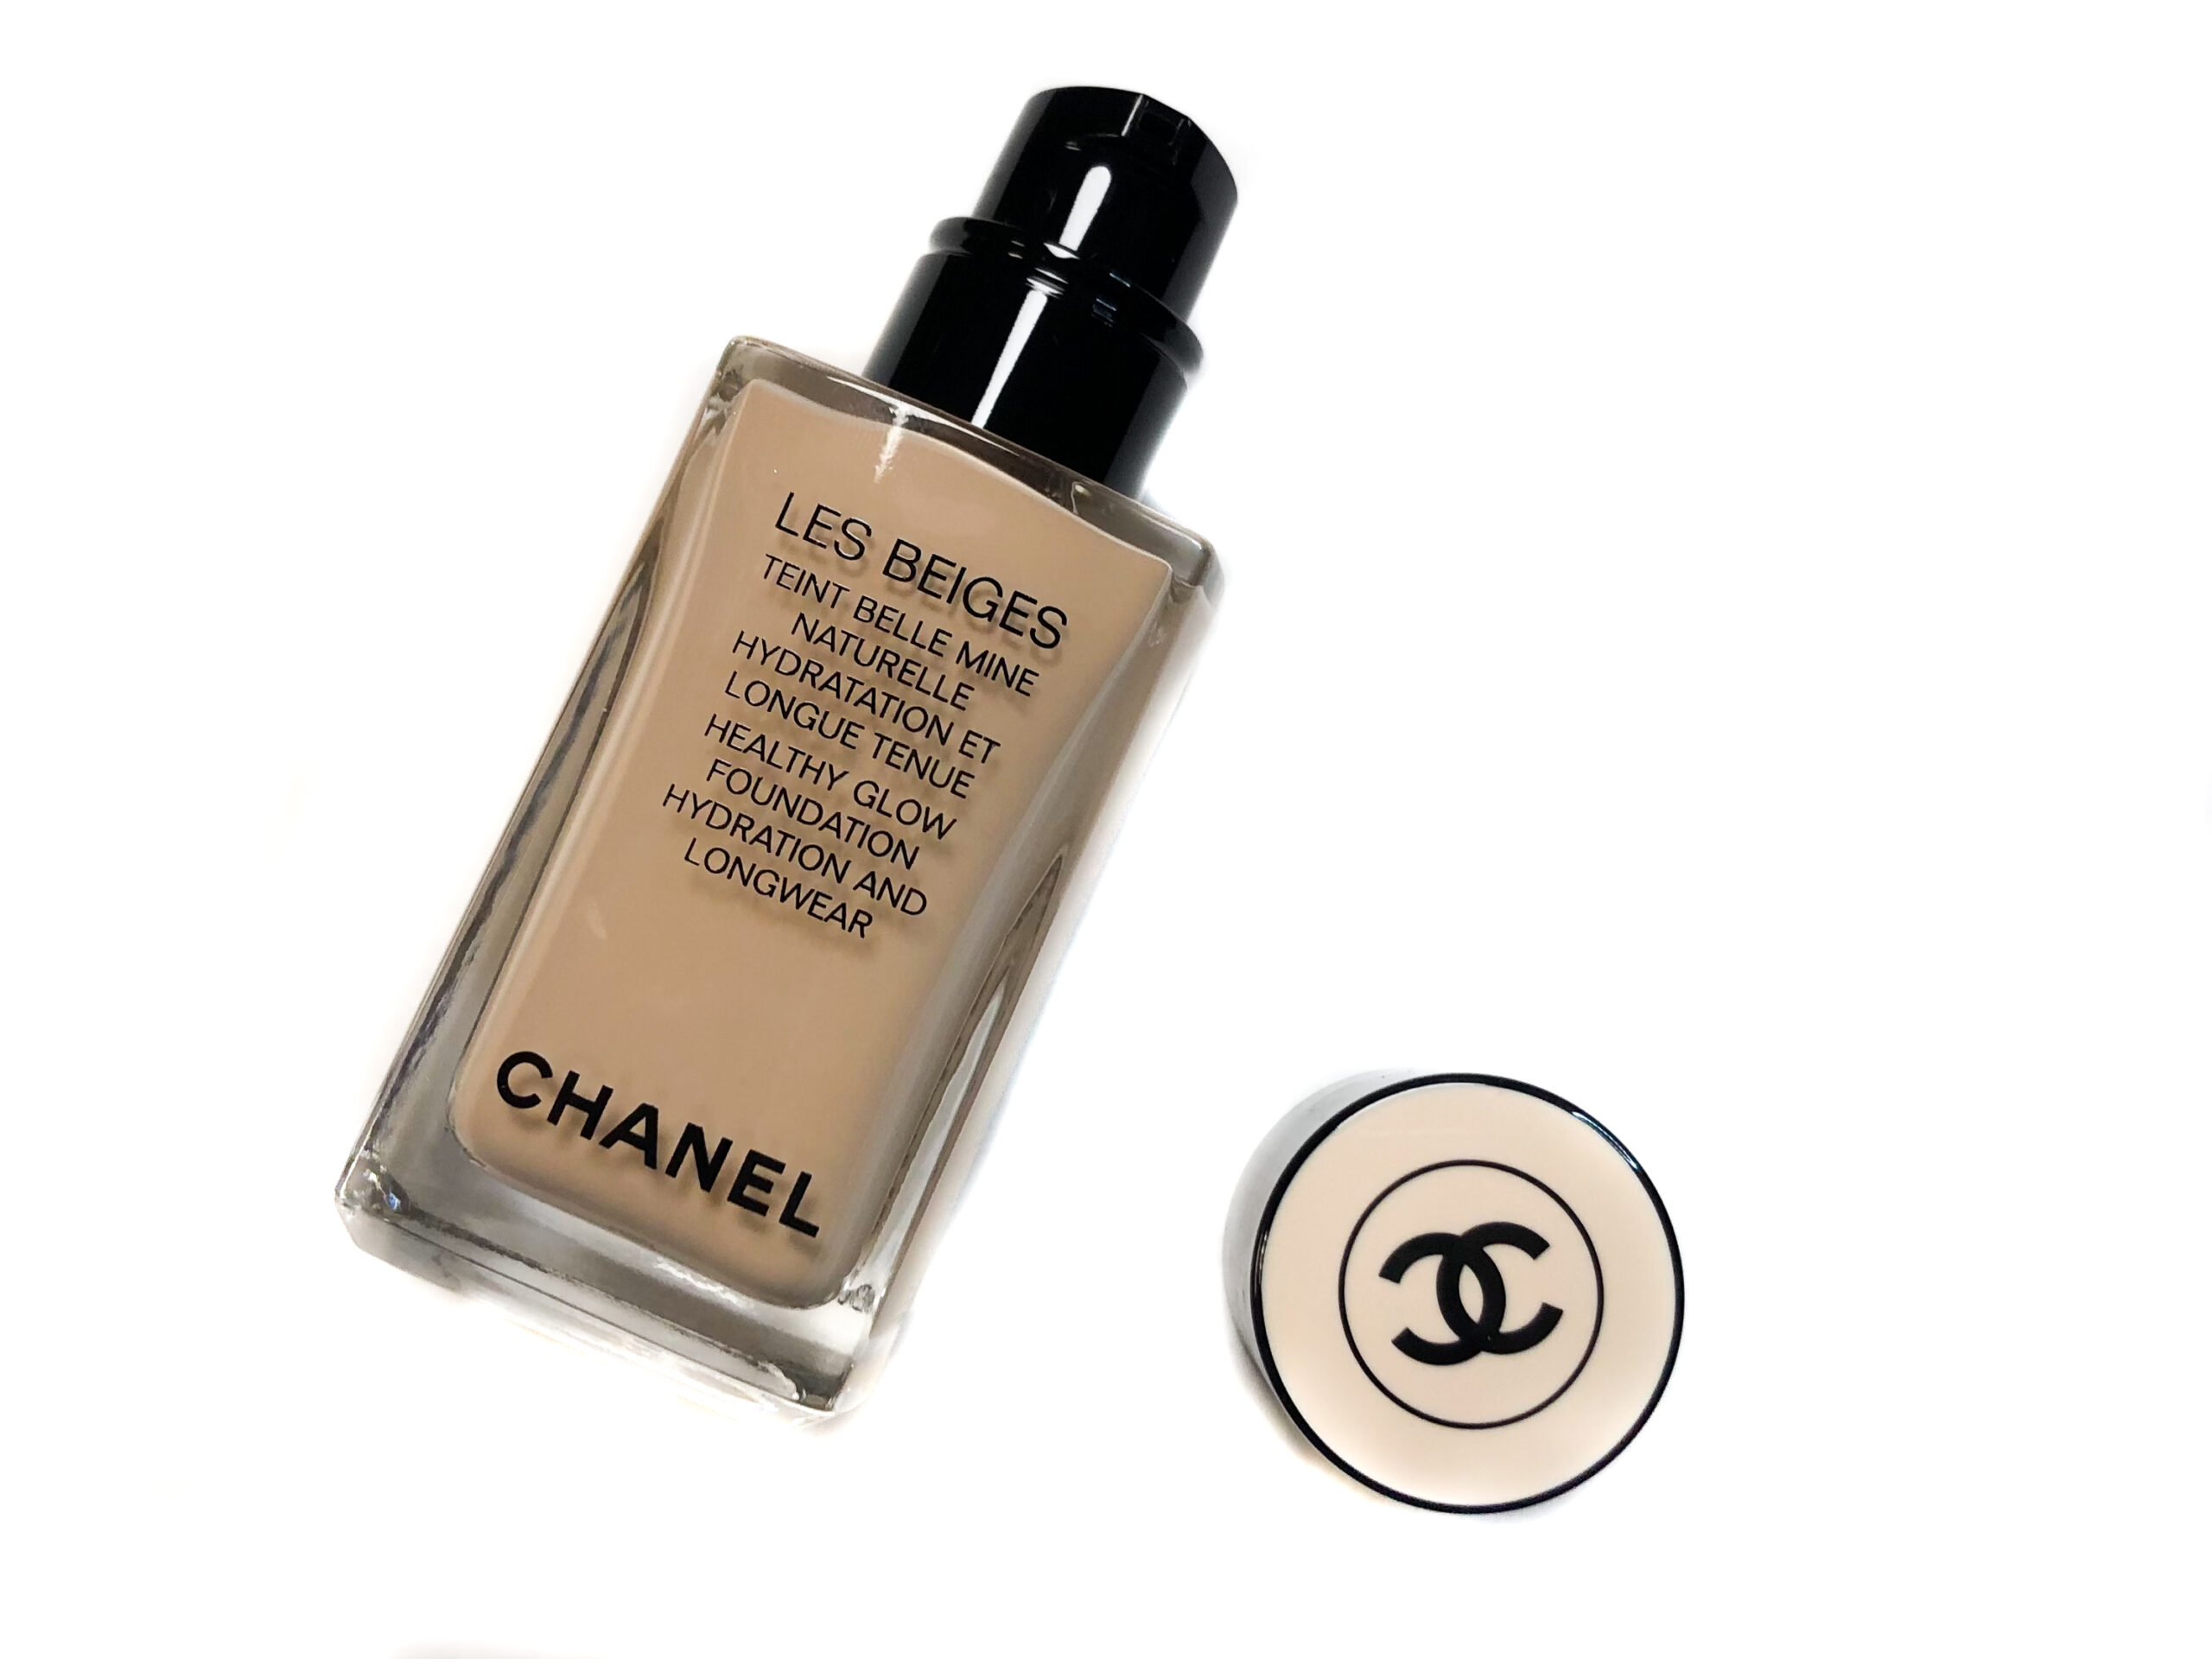 Chanel Les Beiges Healthy Glow Foundation - BR102 (medium deep) New in Box